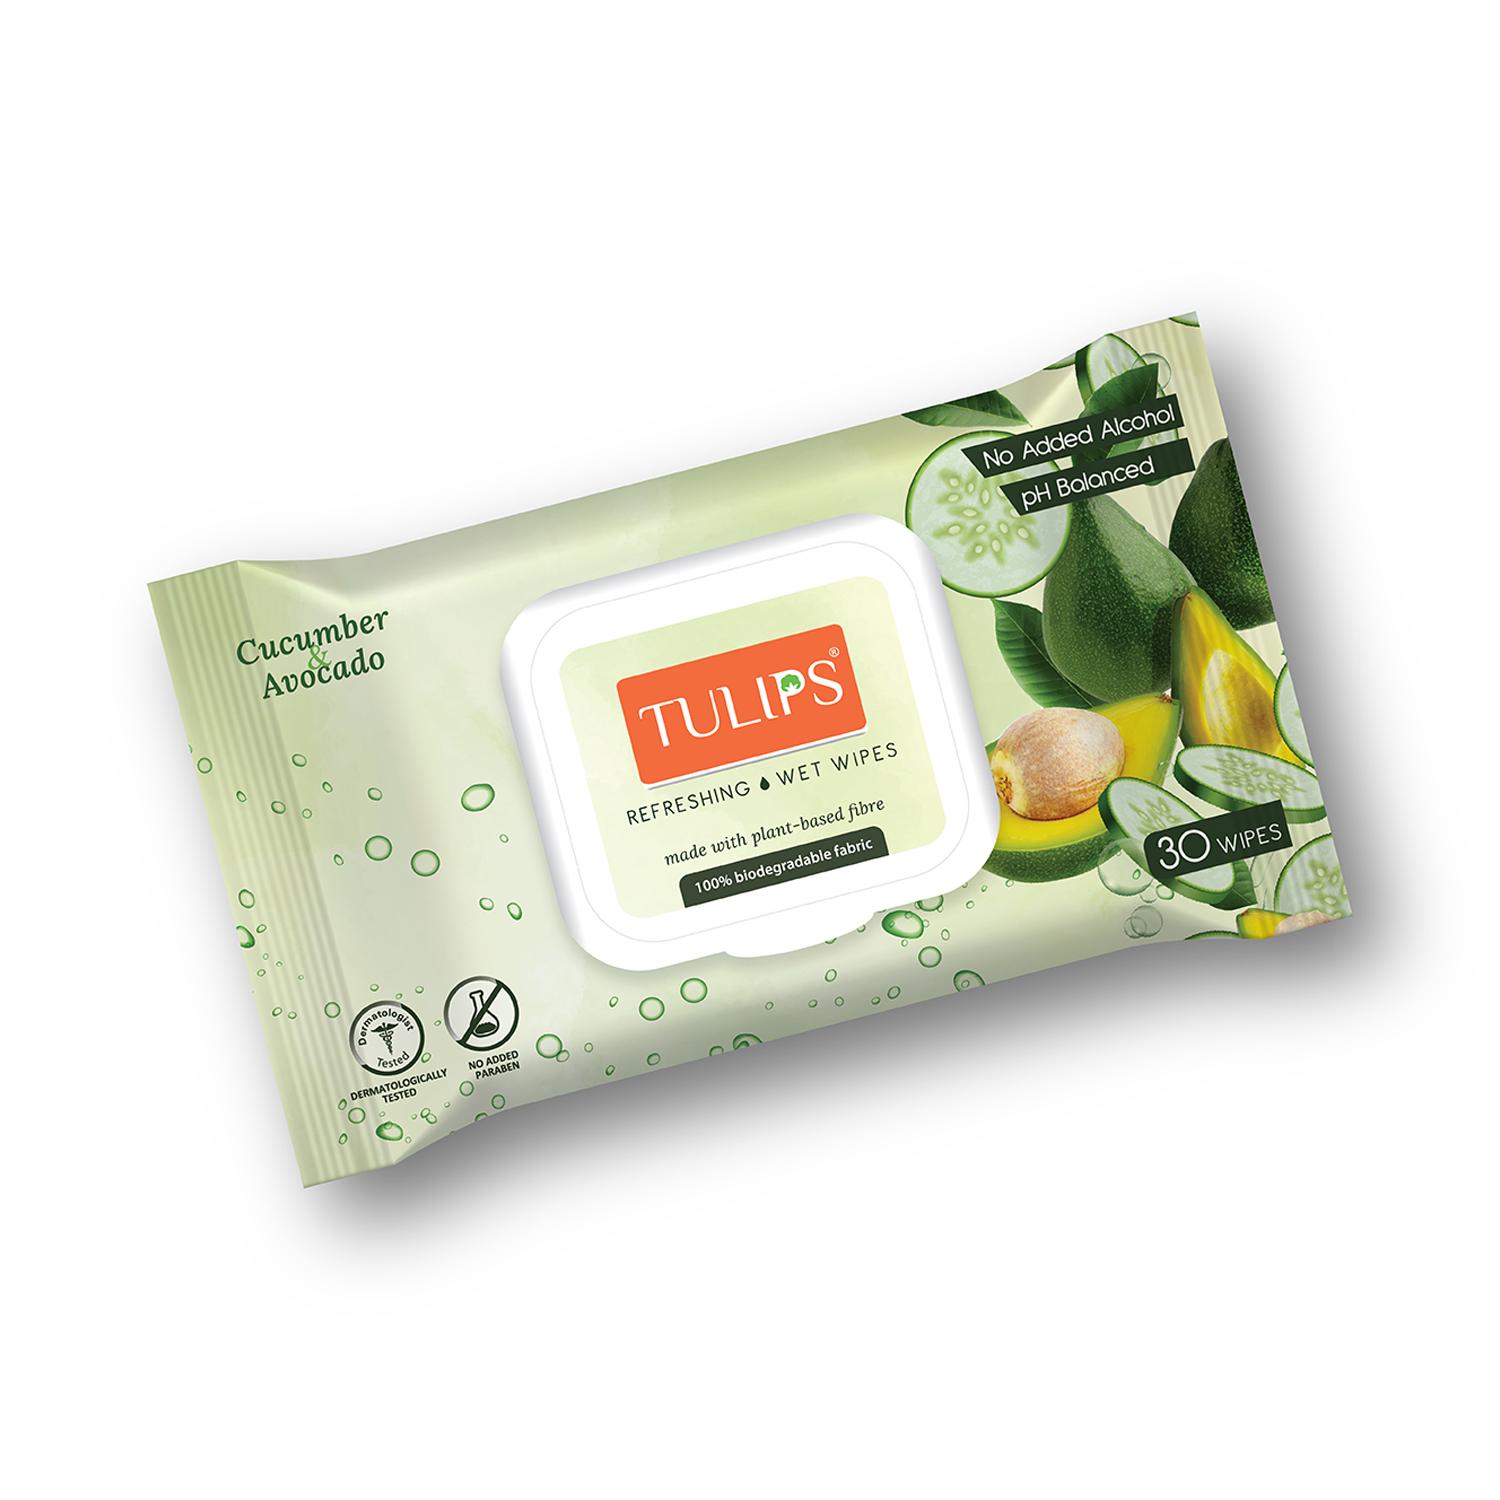 Tulips | Tulips Refreshing Wet Wipes Cucumber & Avocado - (30 pcs)